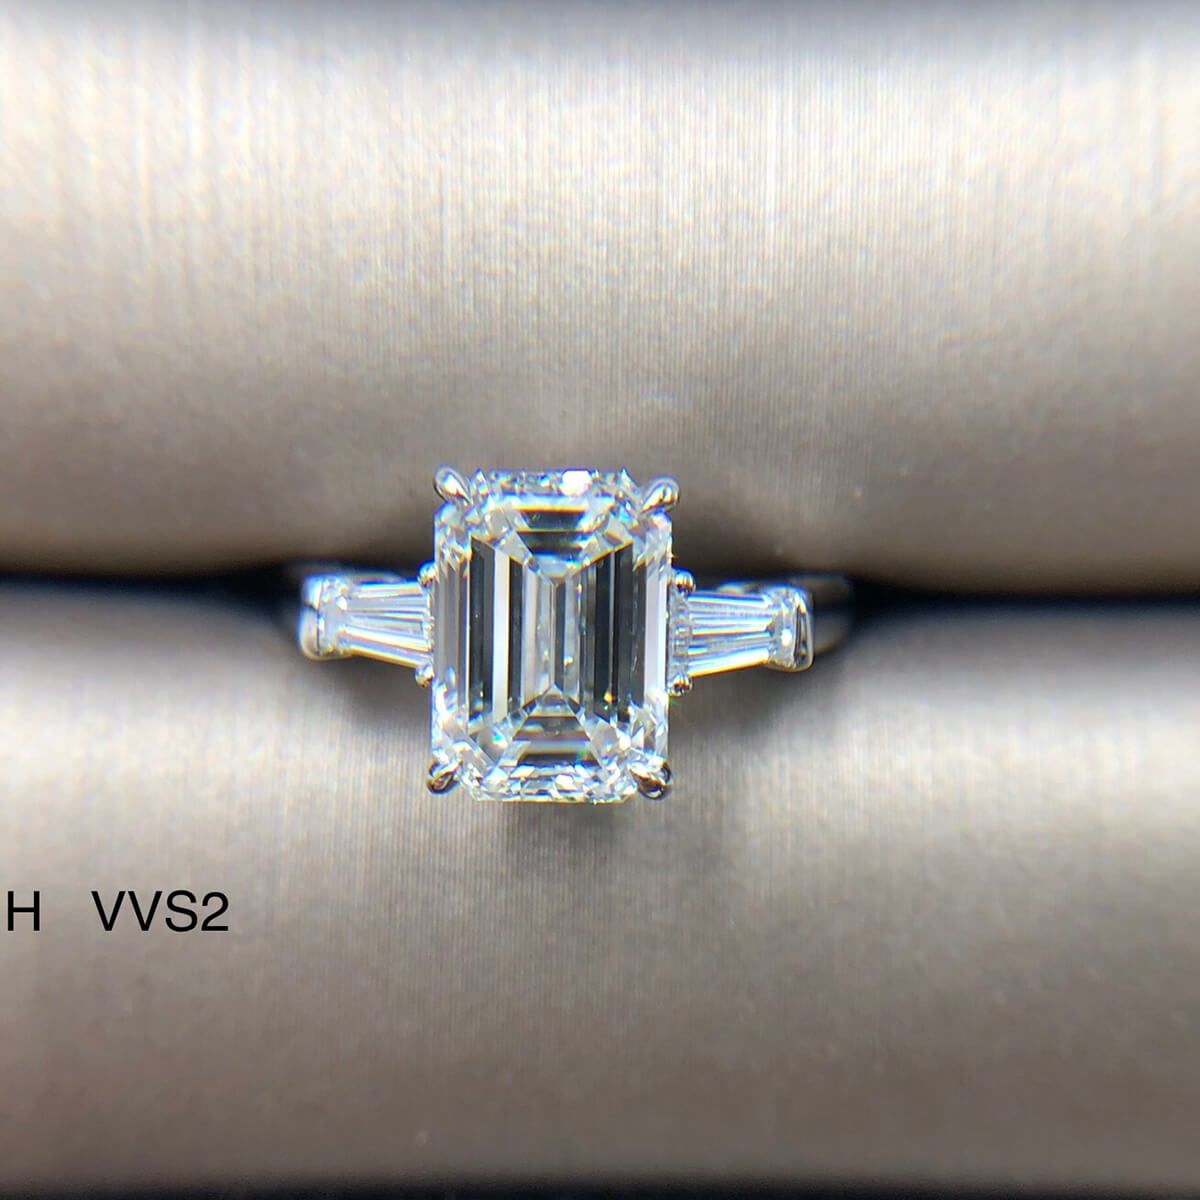  White Diamond Ring, 3.02 Ct. (3.37 Ct. TW), Emerald shape, GIA Certified, 2296070232